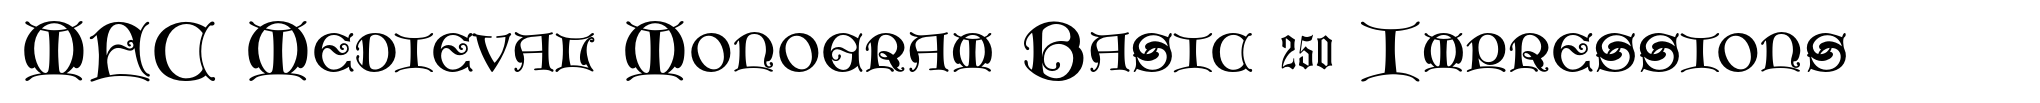 MFC Medieval Monogram Basic 250 Impressions image